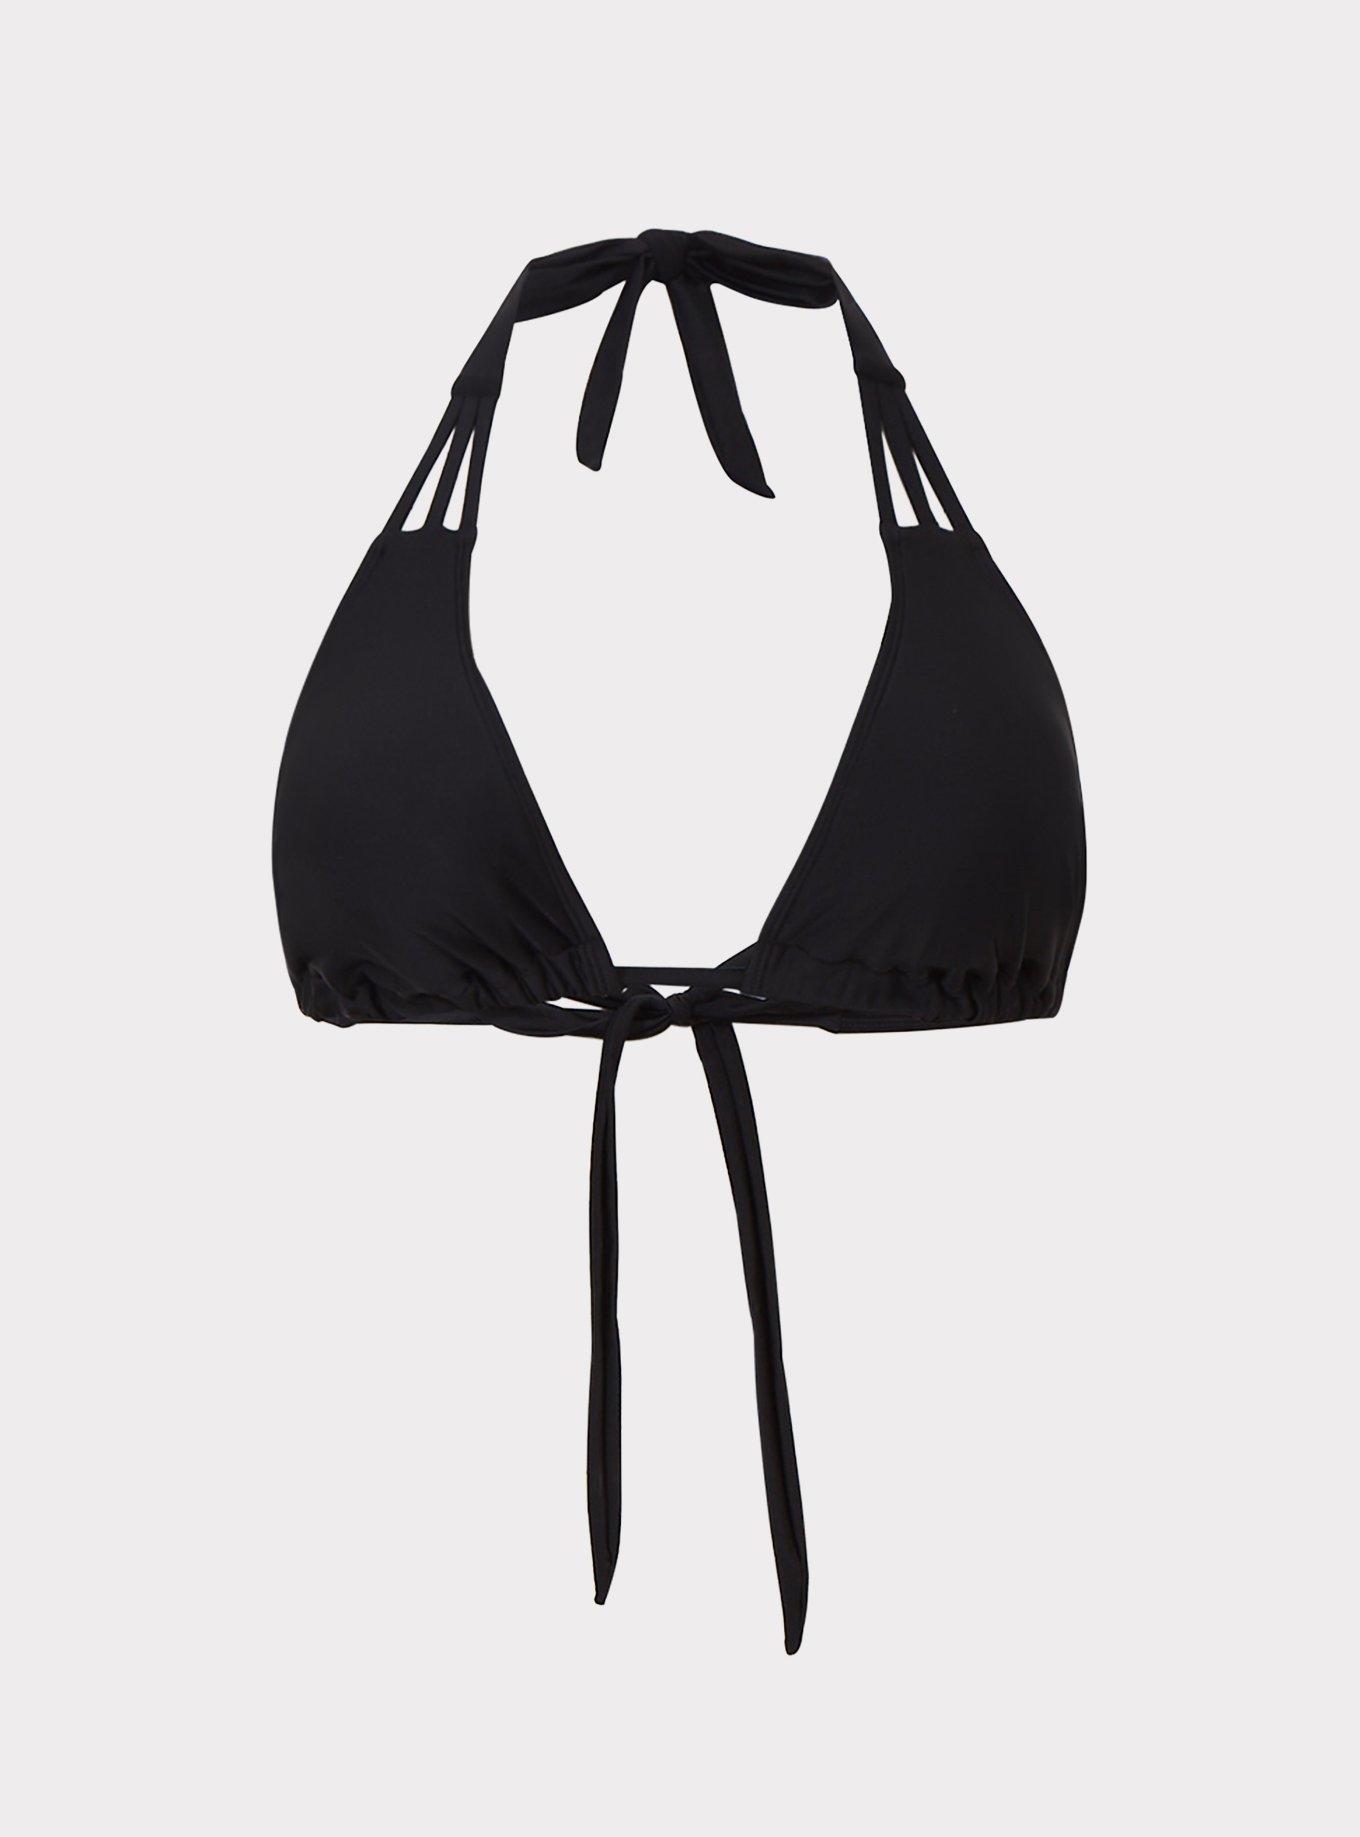 Demi Black Plus Bikini Set, XL-4X